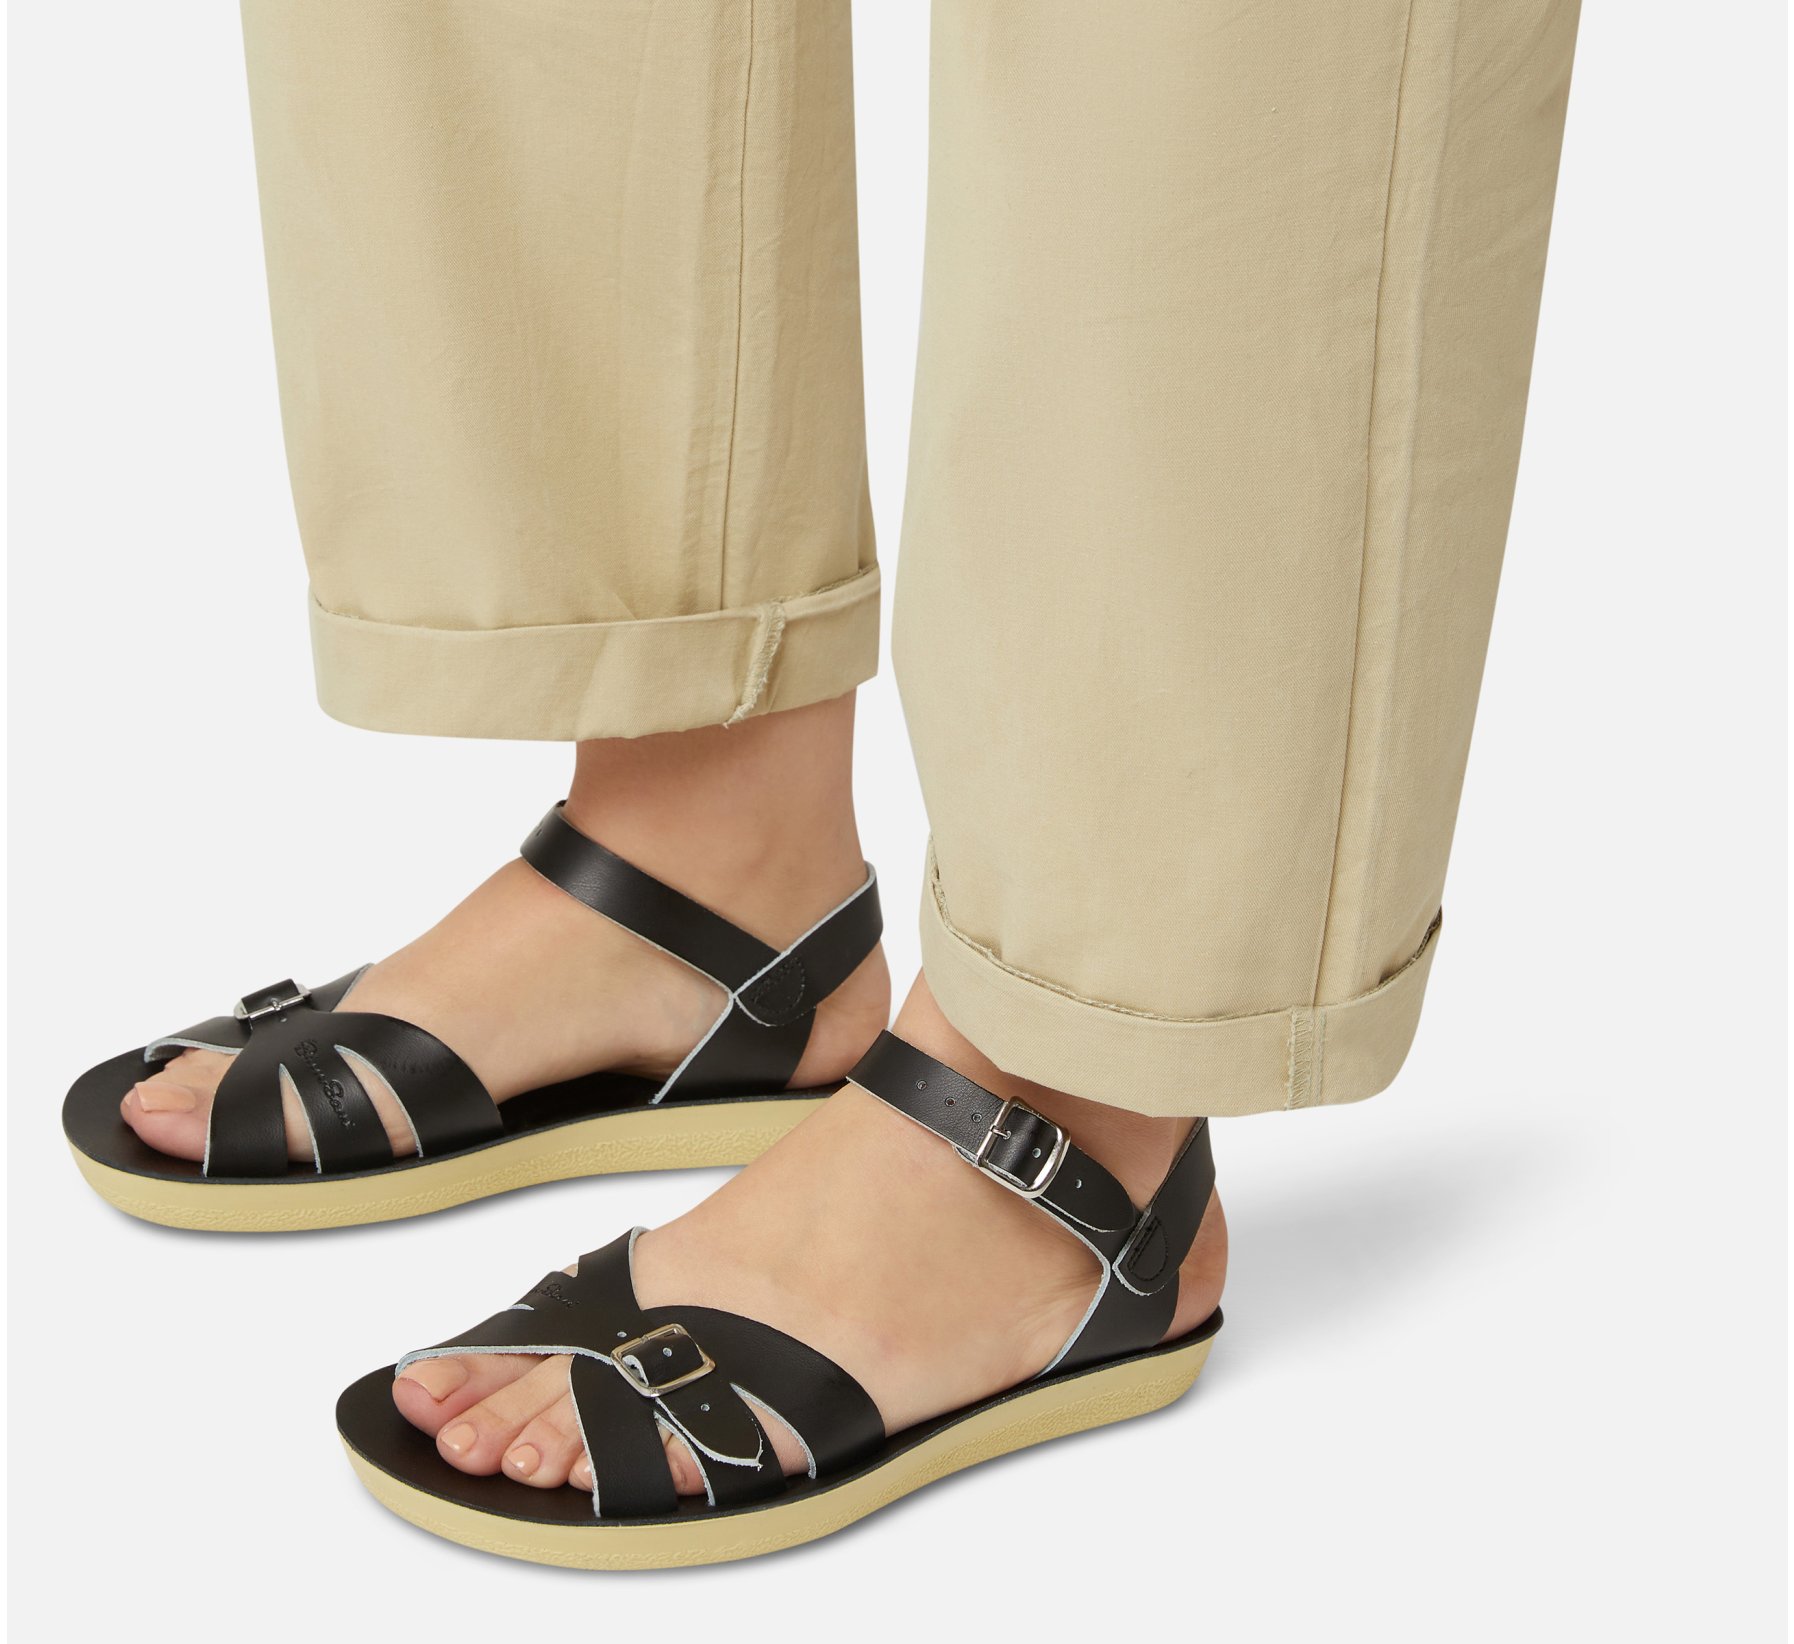 Boardwalk Noire - Salt Water Sandals